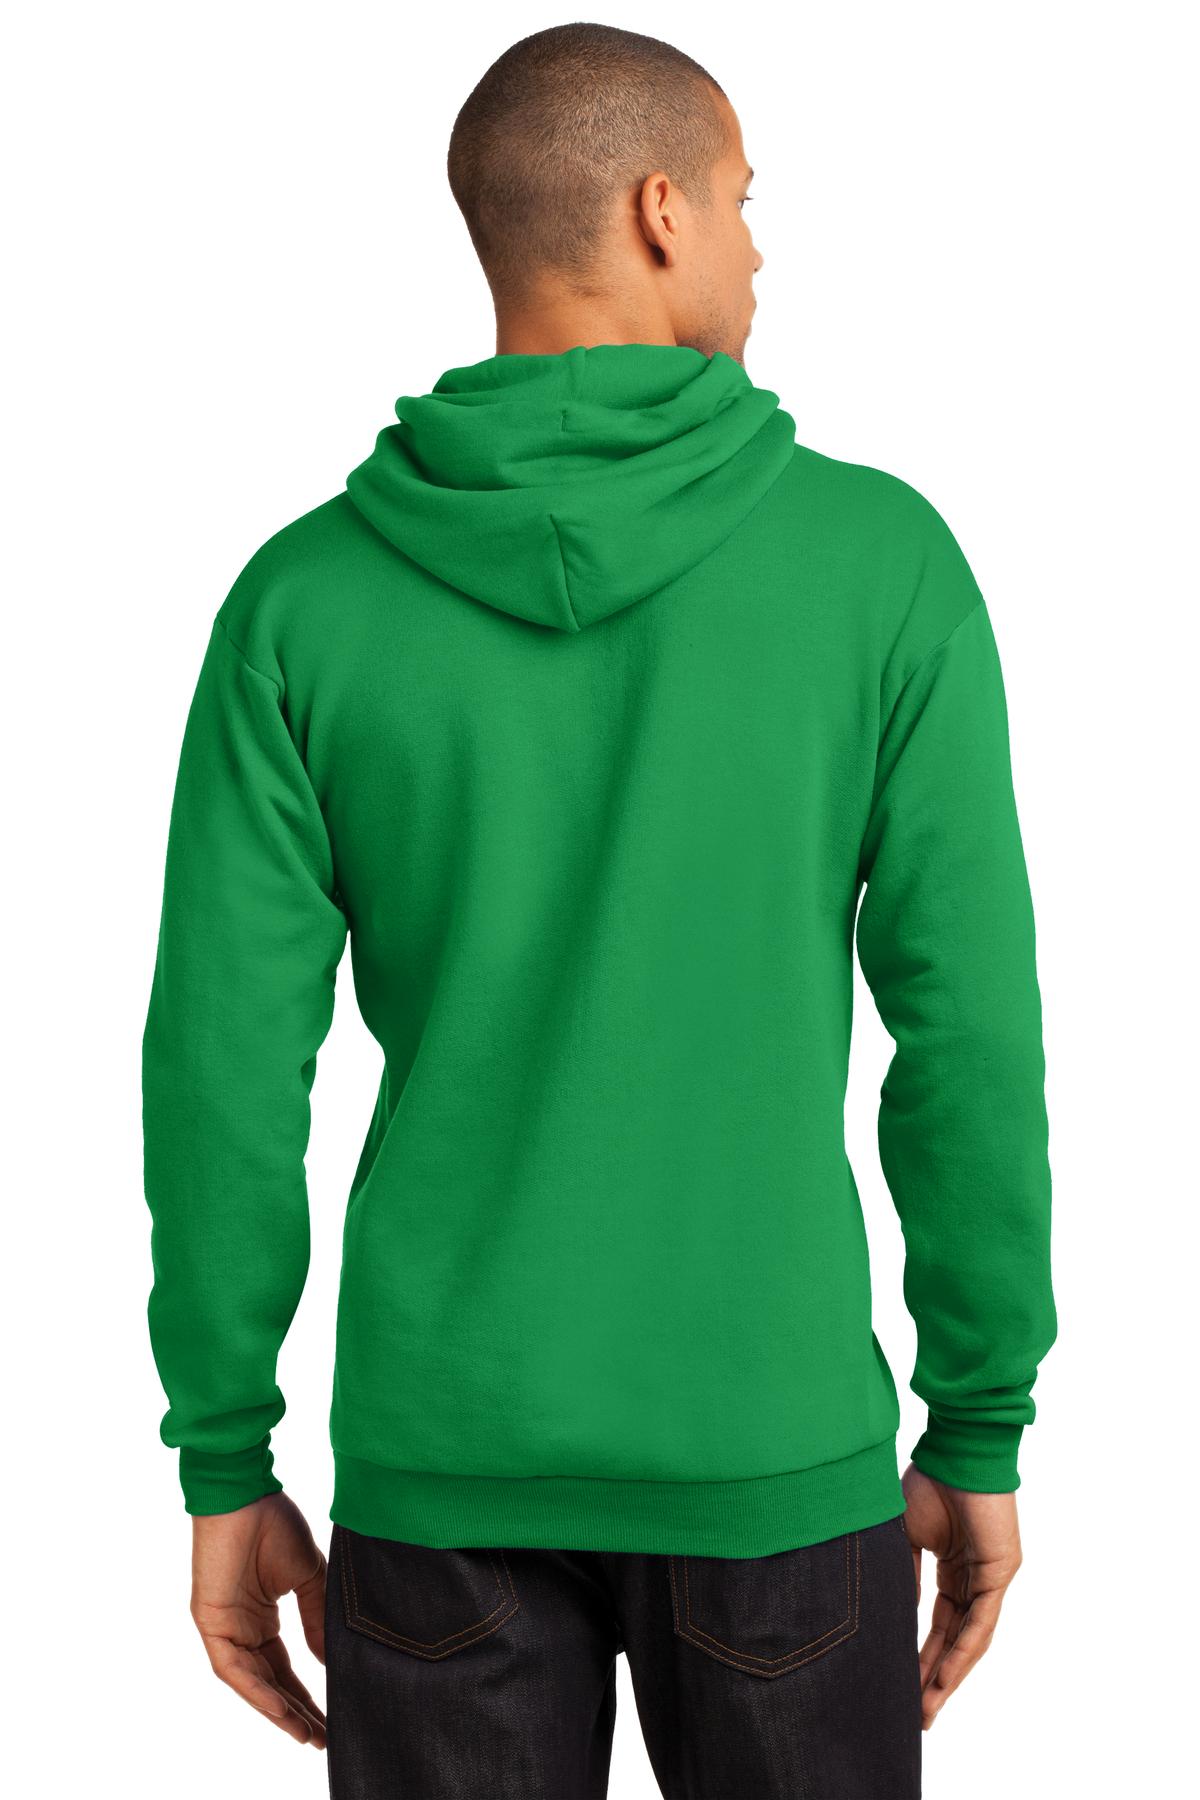 Port & Company - Core Fleece Pullover Hooded Sweatshirt. PC78H - Clover Green